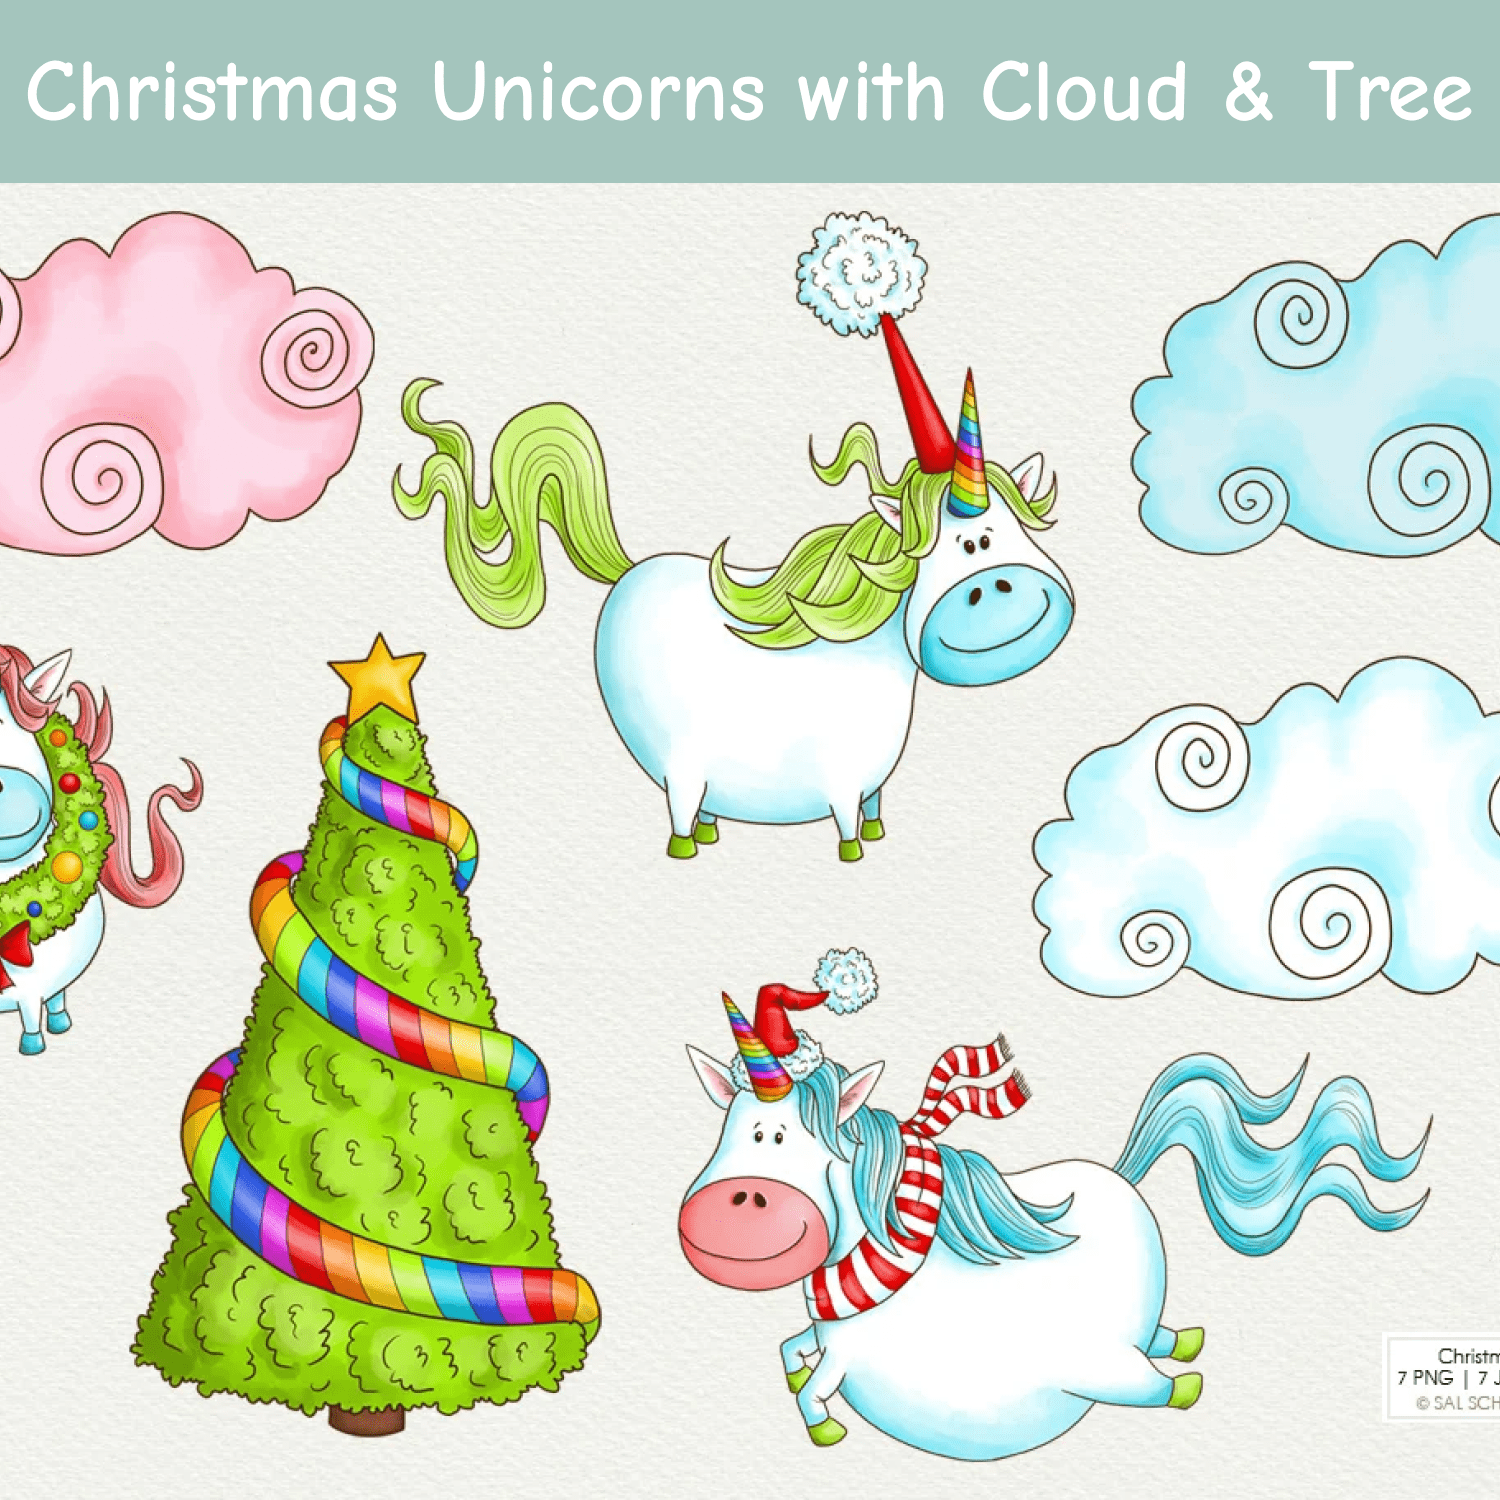 Christmas Unicorns with Cloud & Tree cover.